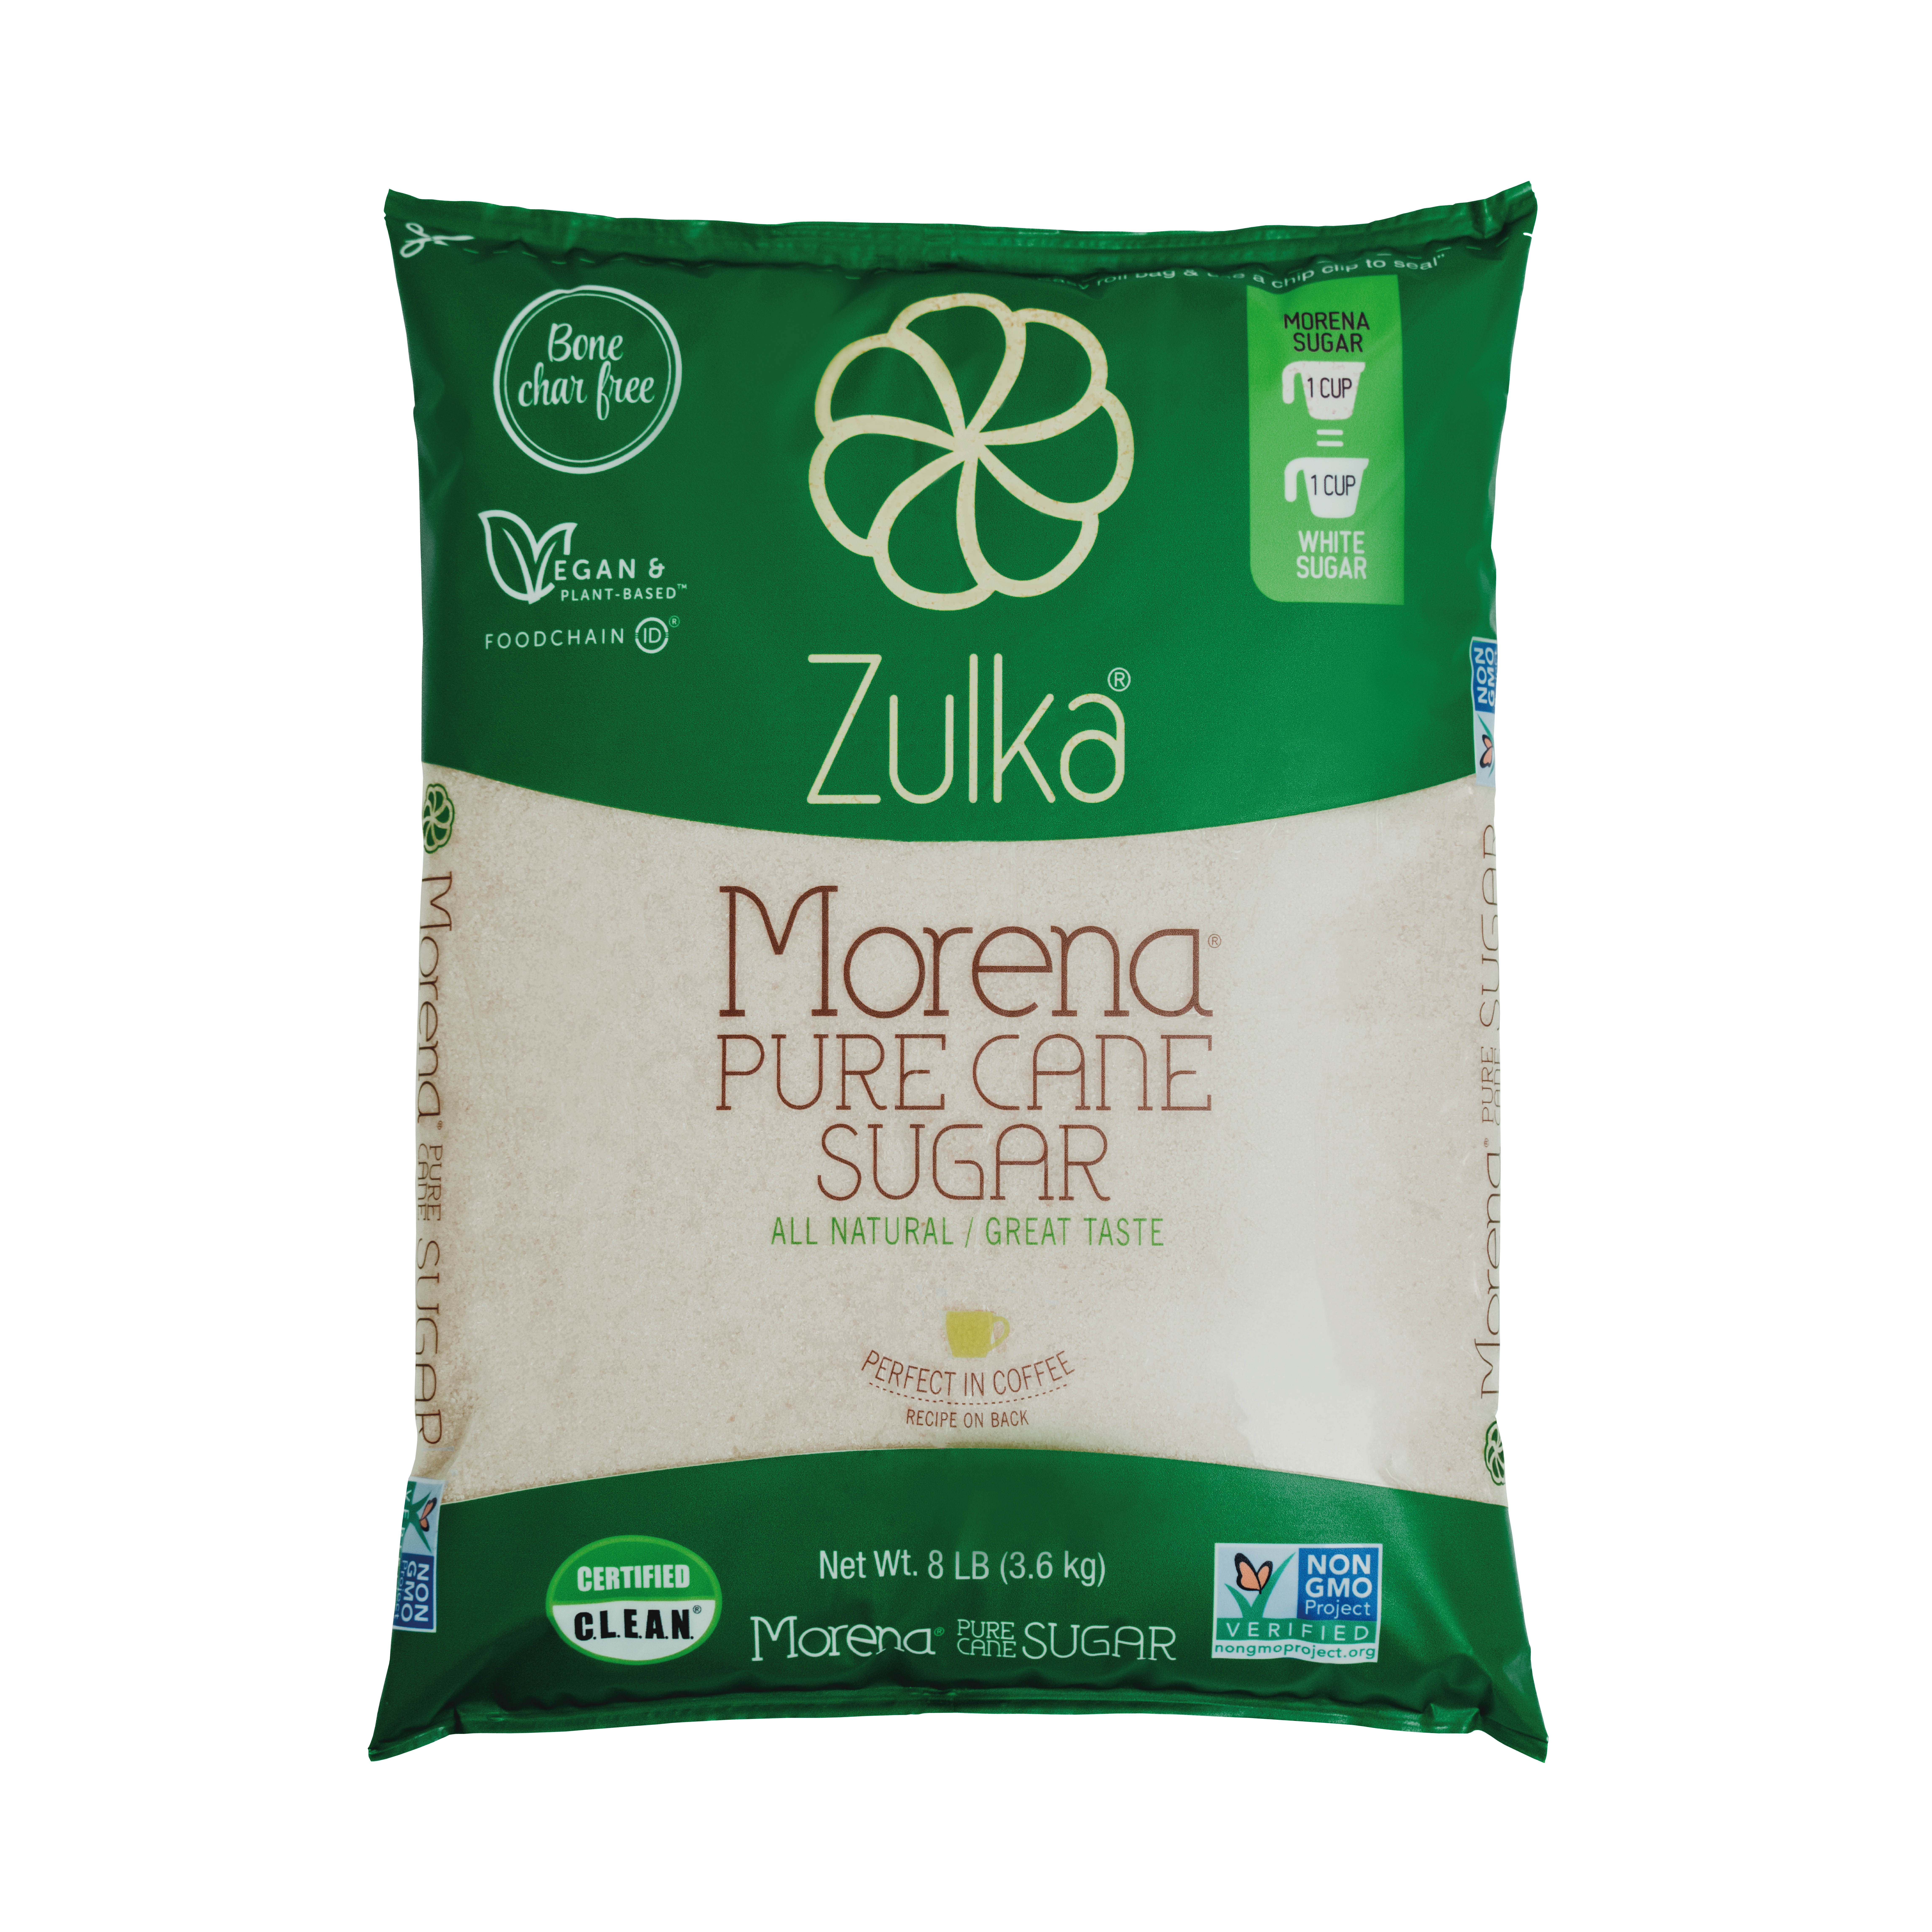 Zulka Pure Cane Sugar,  8 lb,  Vegan & Plant Based and Non GMO - image 1 of 10